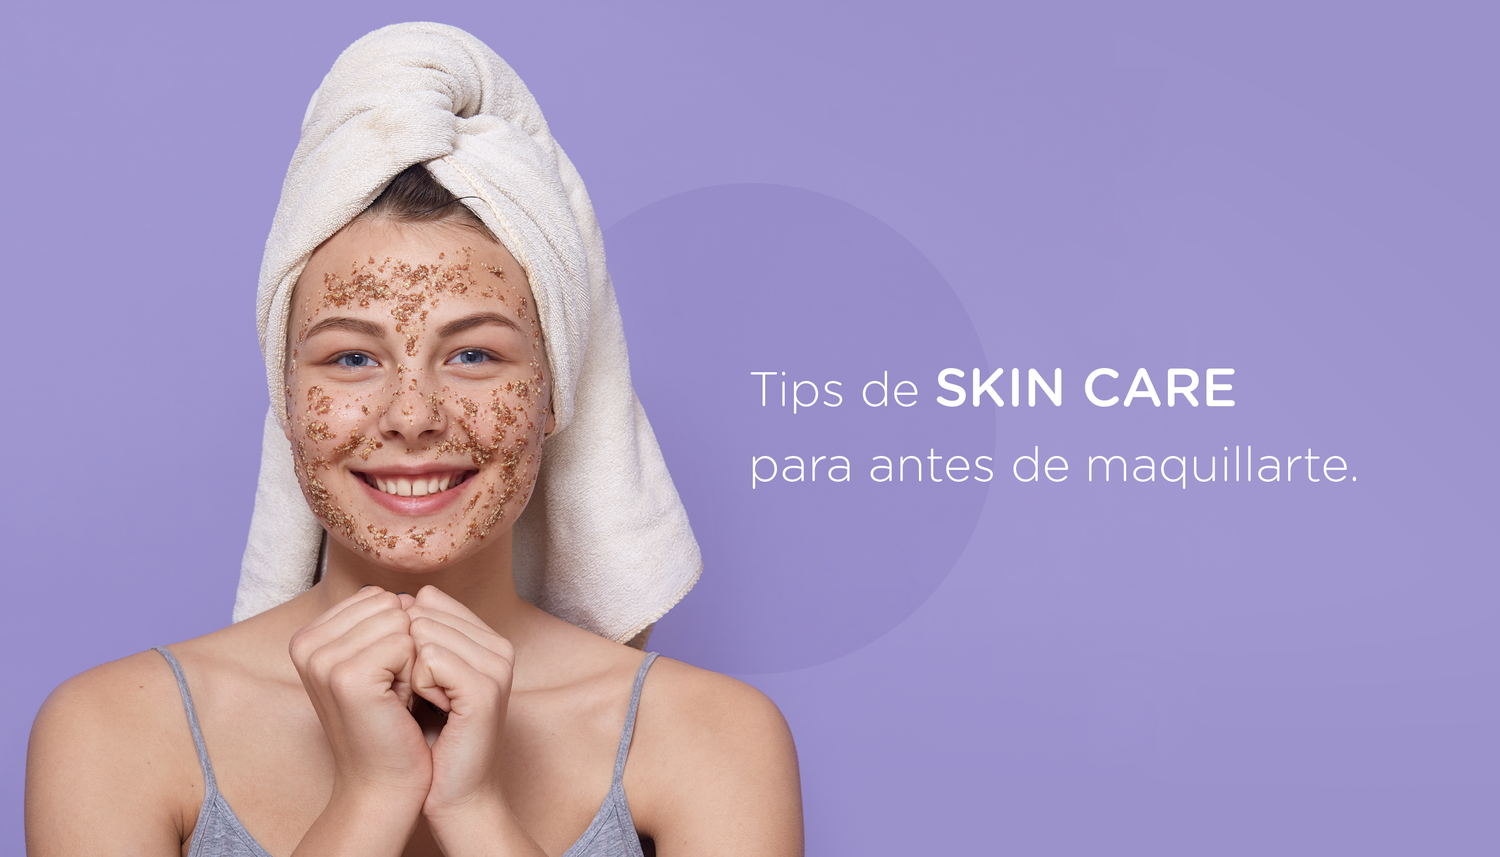 Tips de Skin Care para antes de maquillarte